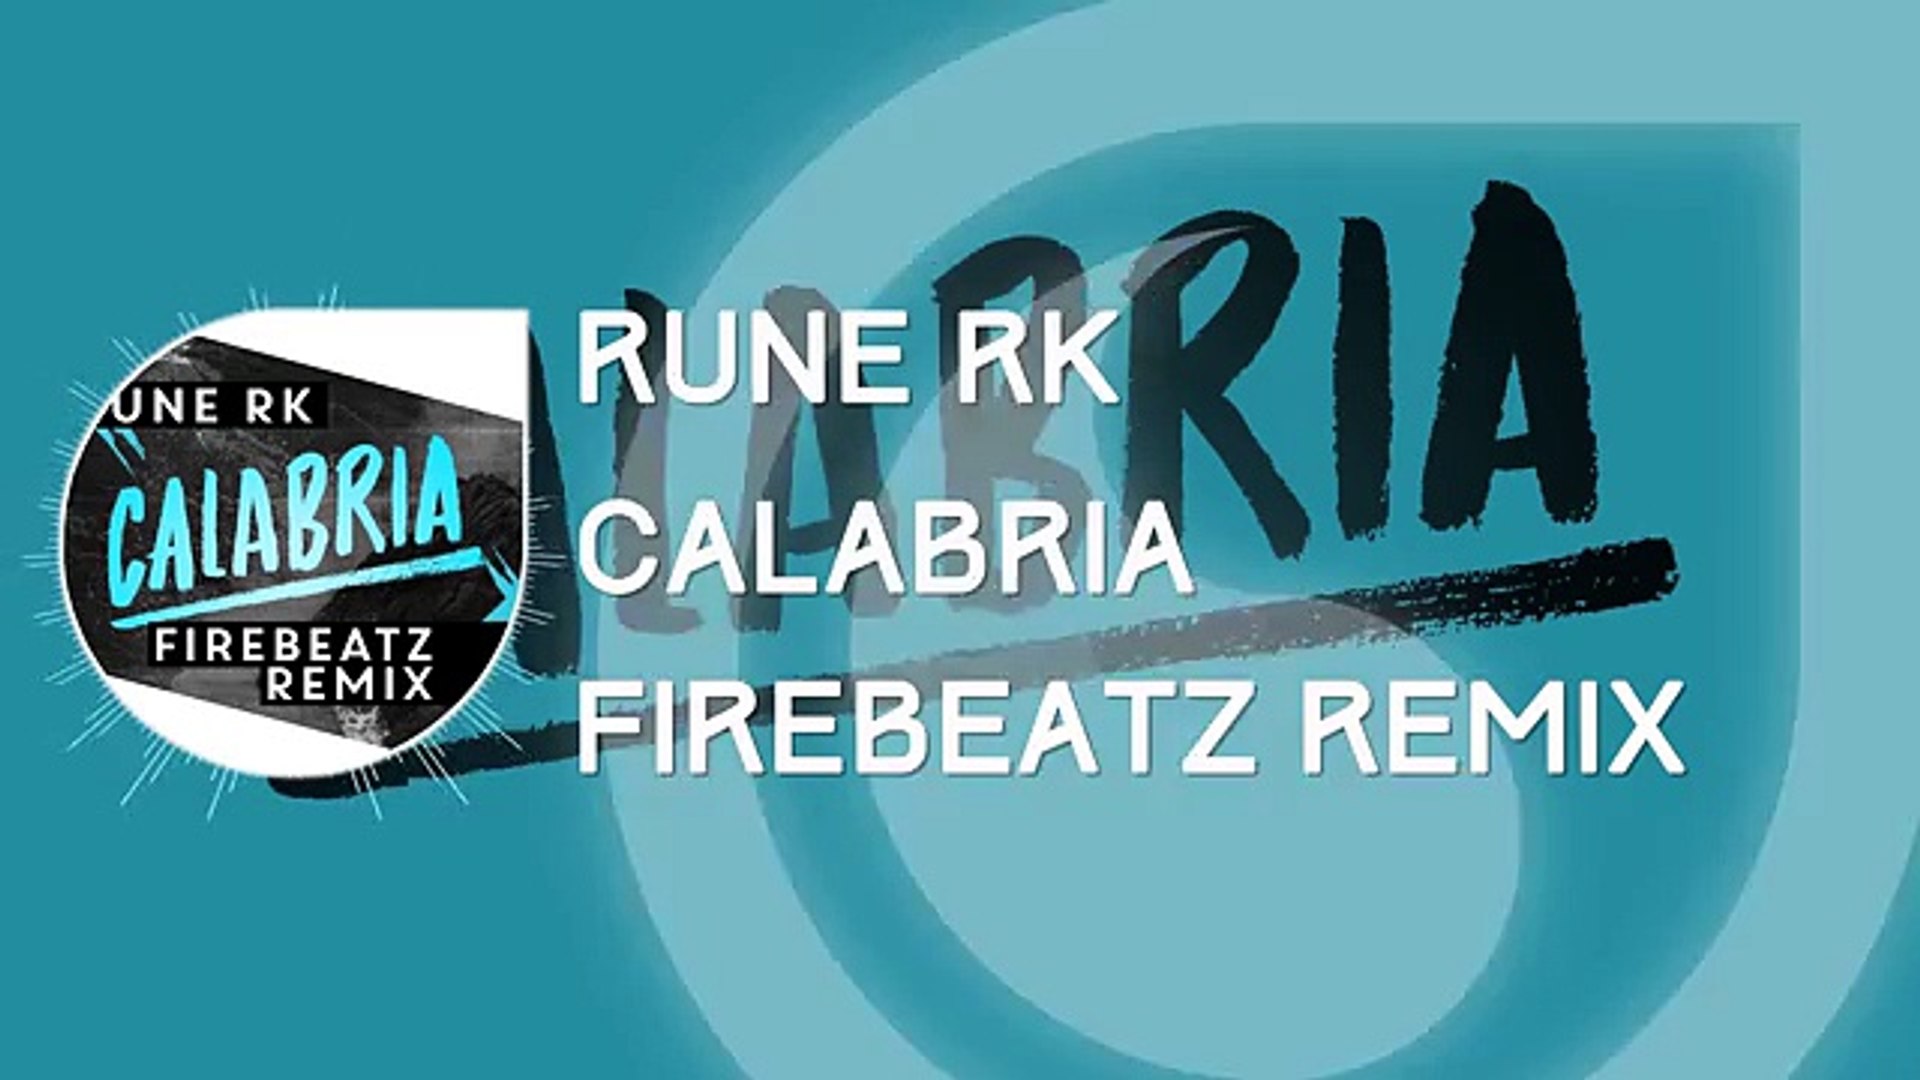 Rune RK - Calabria - Dailymotion Video